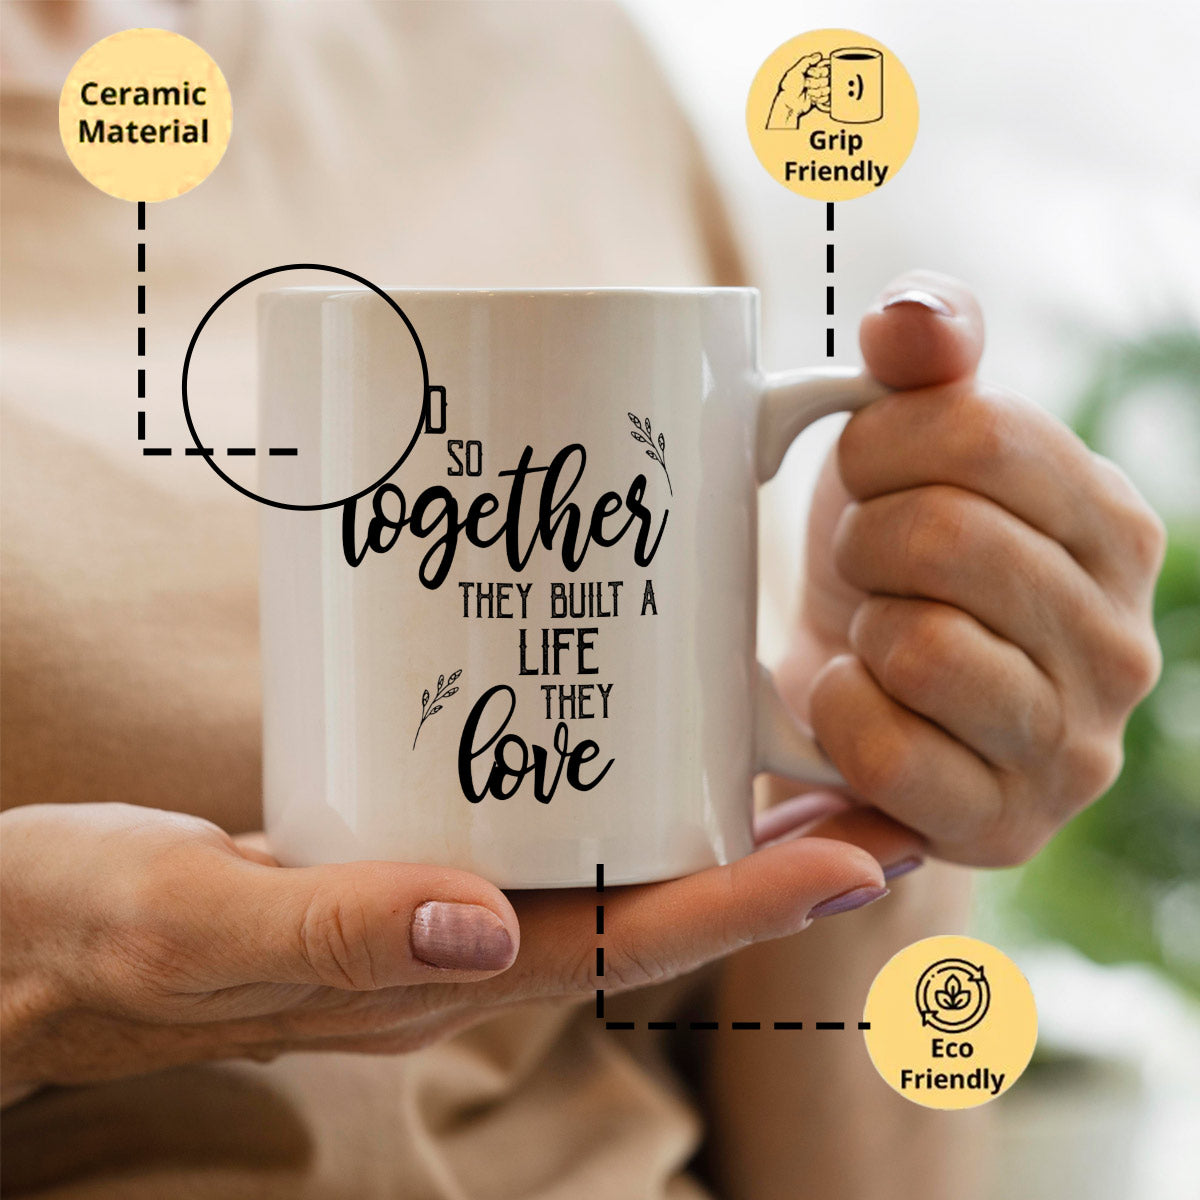 Happily Together Heart Handle Coffee Mug